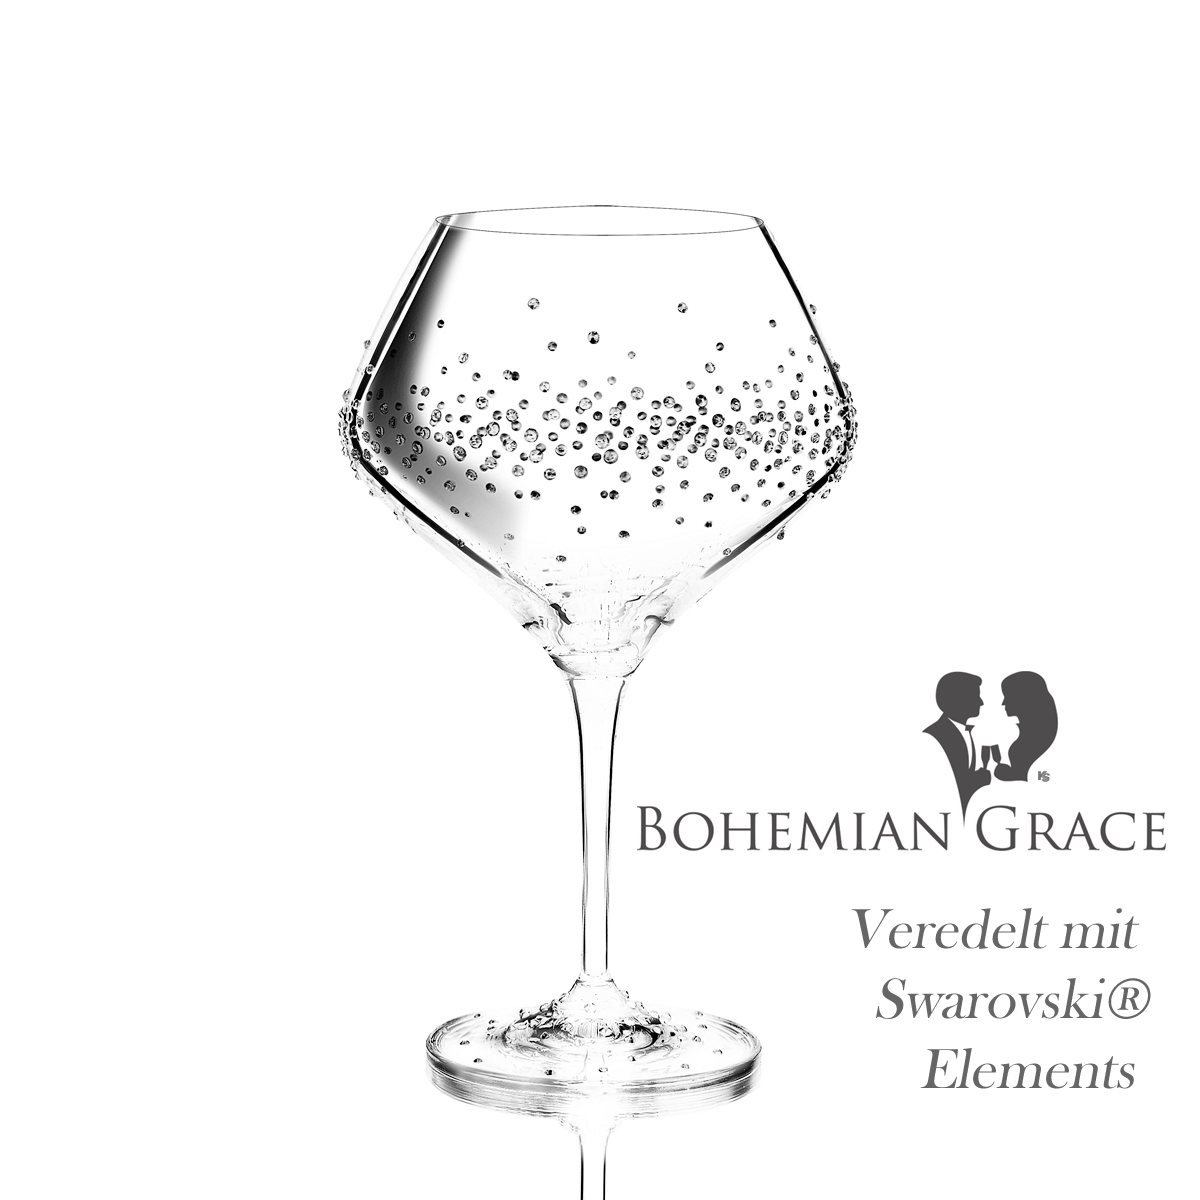 Weinglas 2Stk HERMES 470 Bohemian Grace - Rotweingläser HERMES 2Stk, mit Swarovski Elements